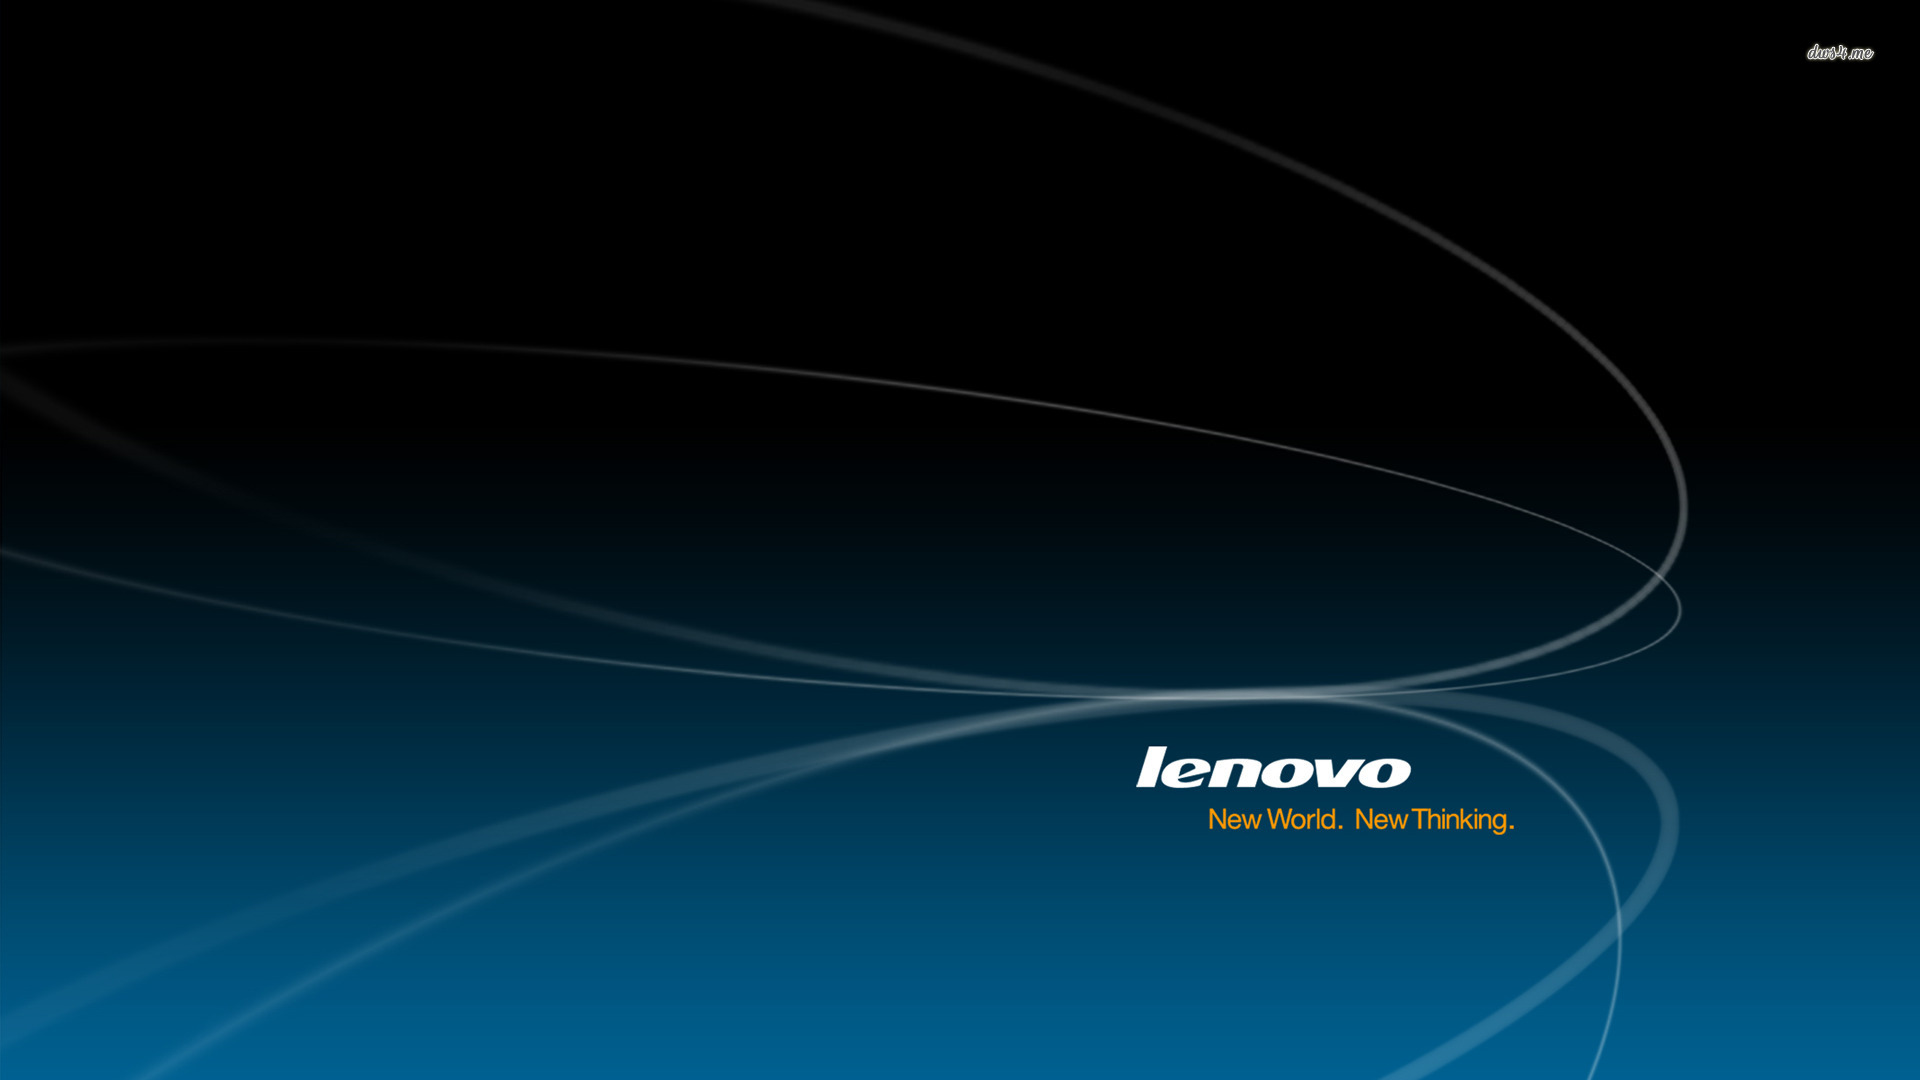 48 Lenovo Wallpapers Free Download On Wallpapersafari